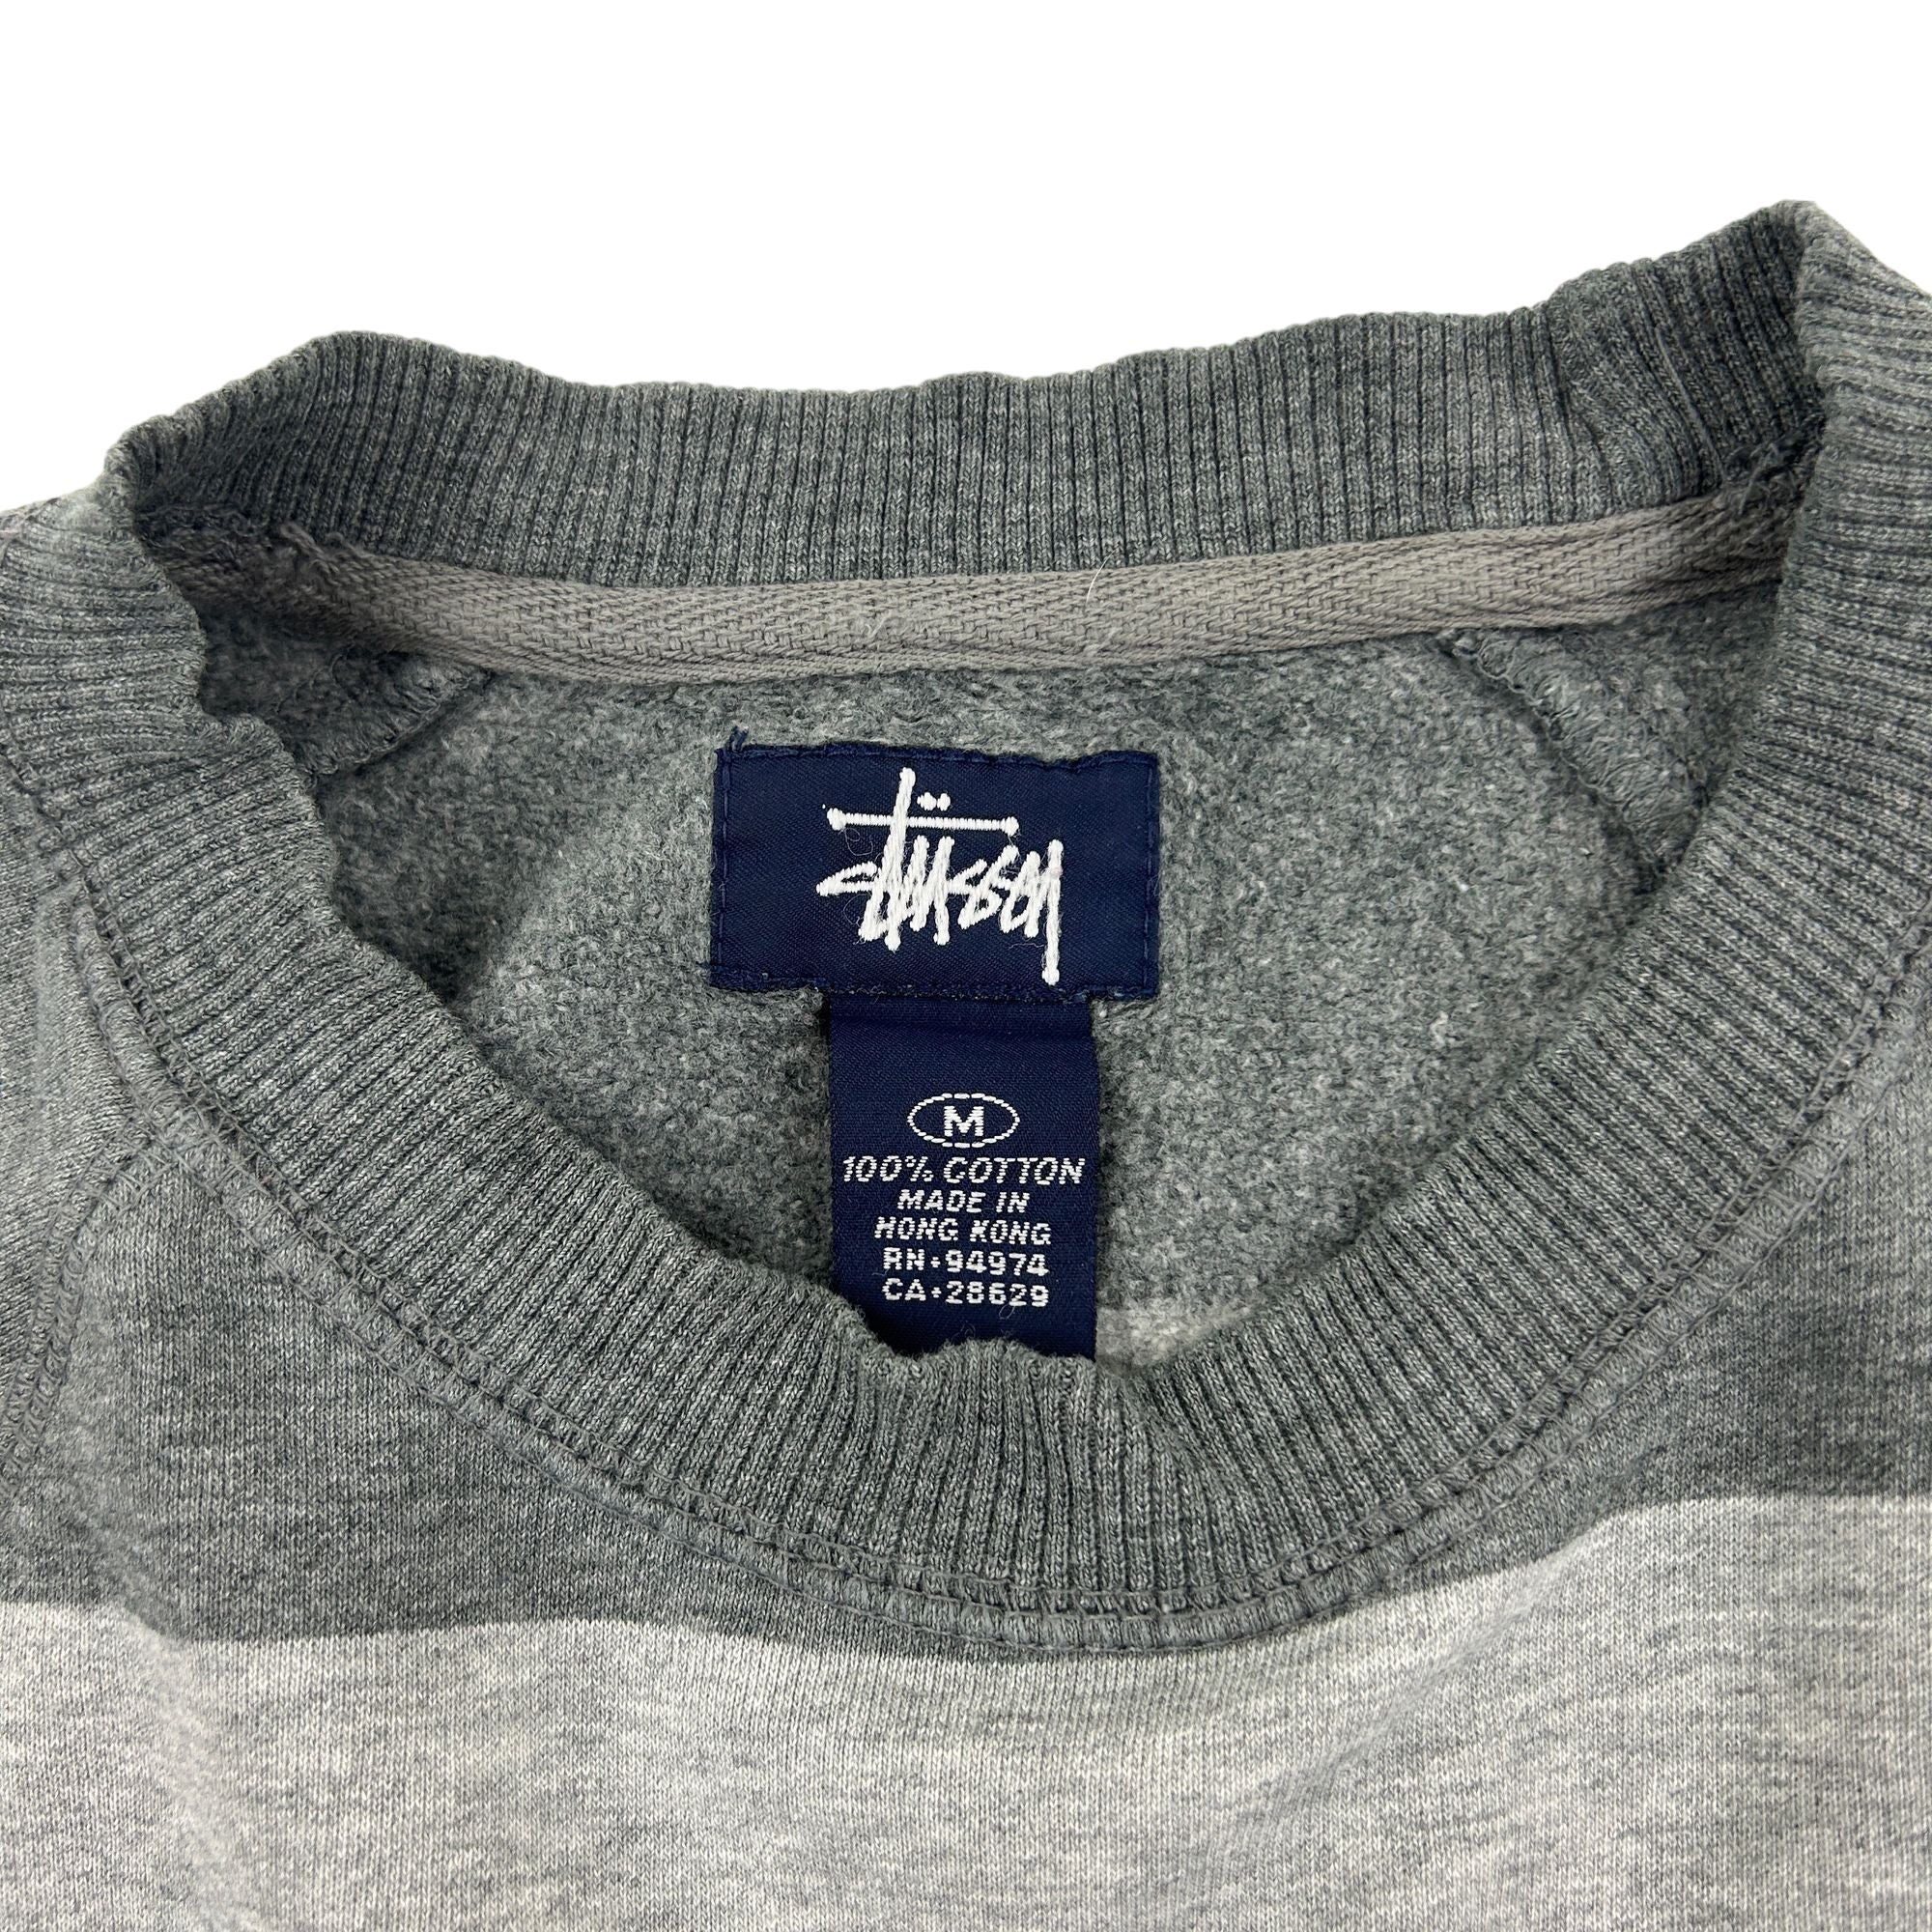 Vintage Stussy Grey Striped Sweatshirt 90s Size M 100% Cotton 